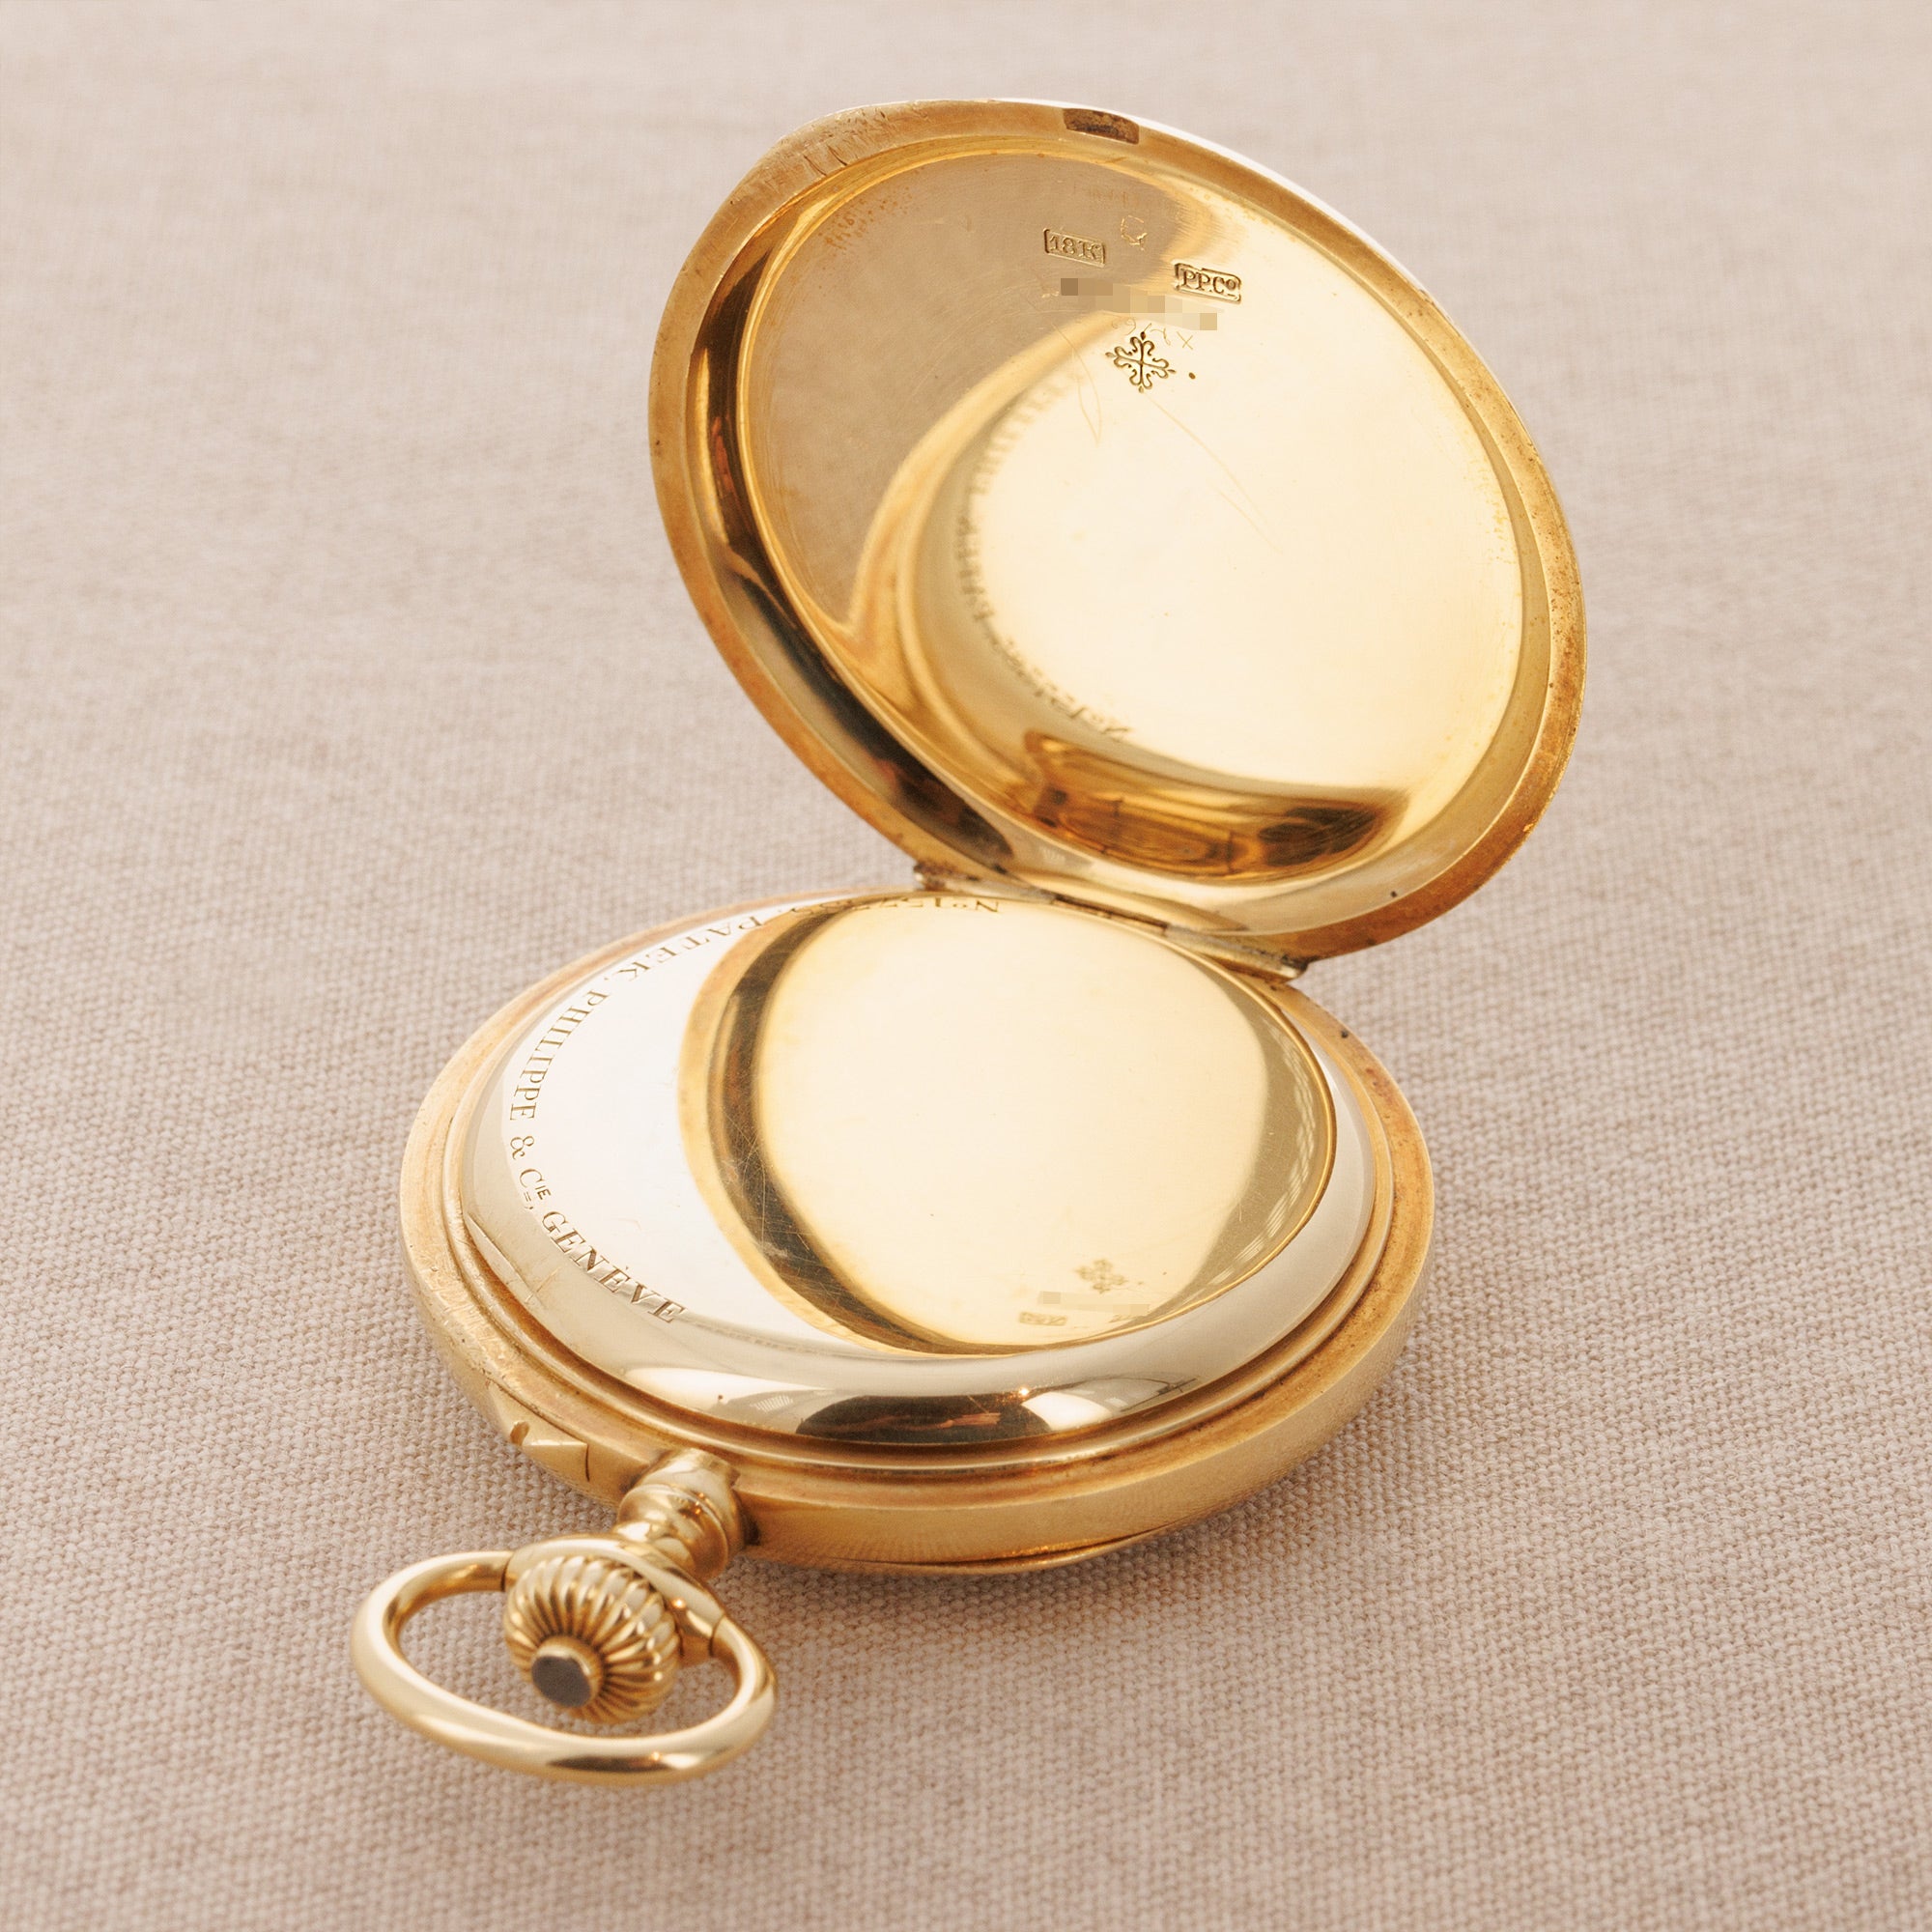 Patek Philippe Yellow Gold Chronograph Pocket Watch